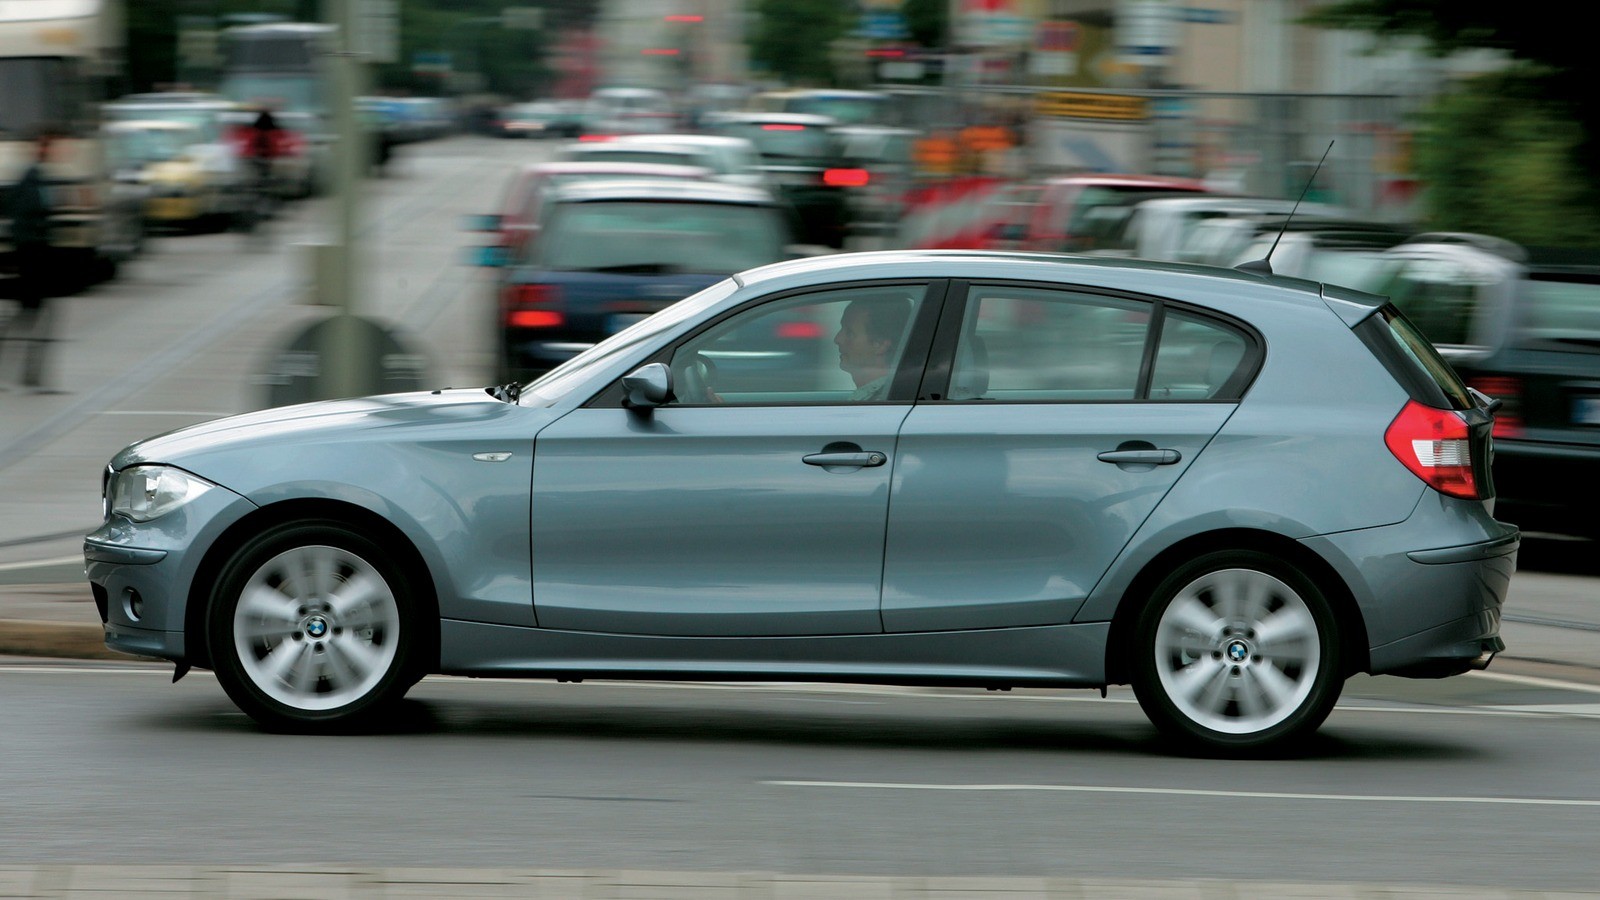 BMW xDrive (описание, принцип работы) - BMW 3 BLOG